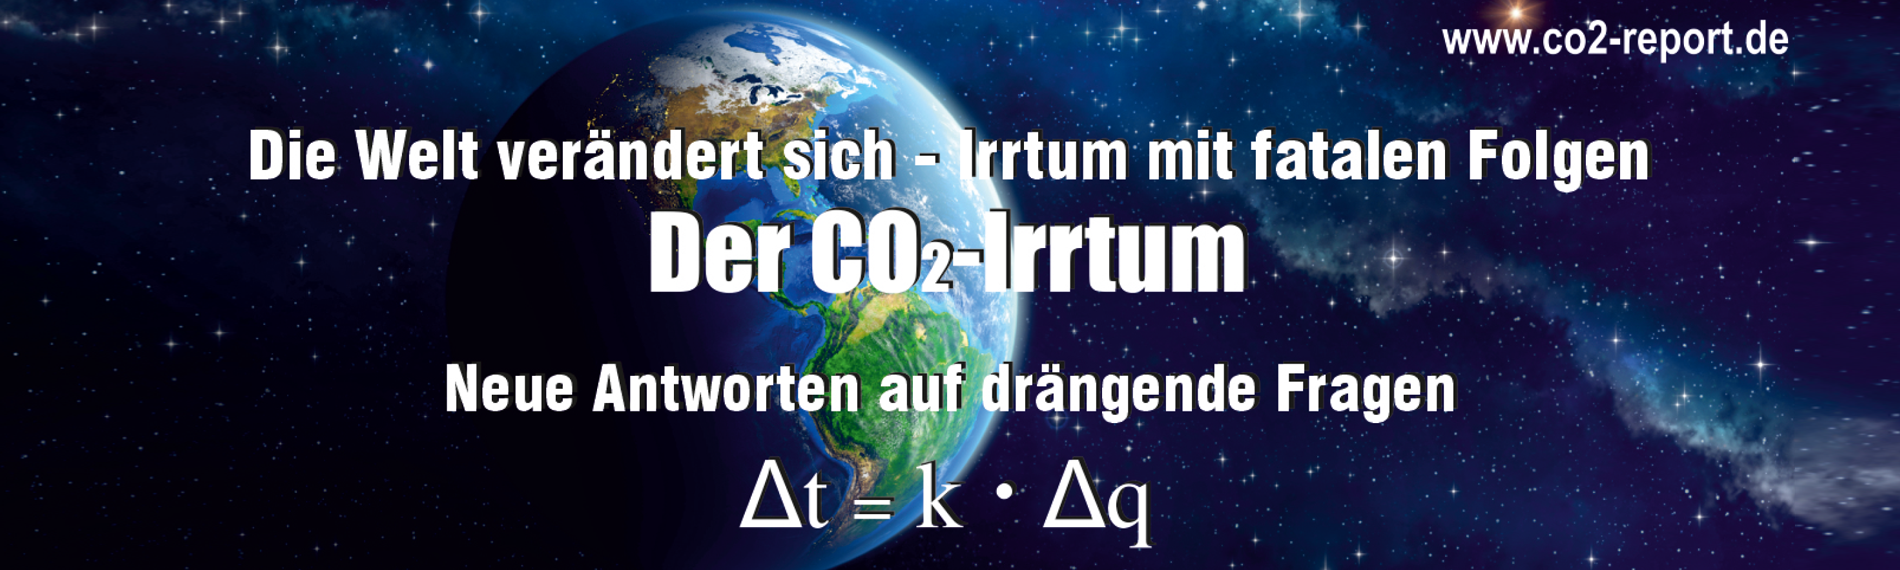 CO2-Report Slider 1